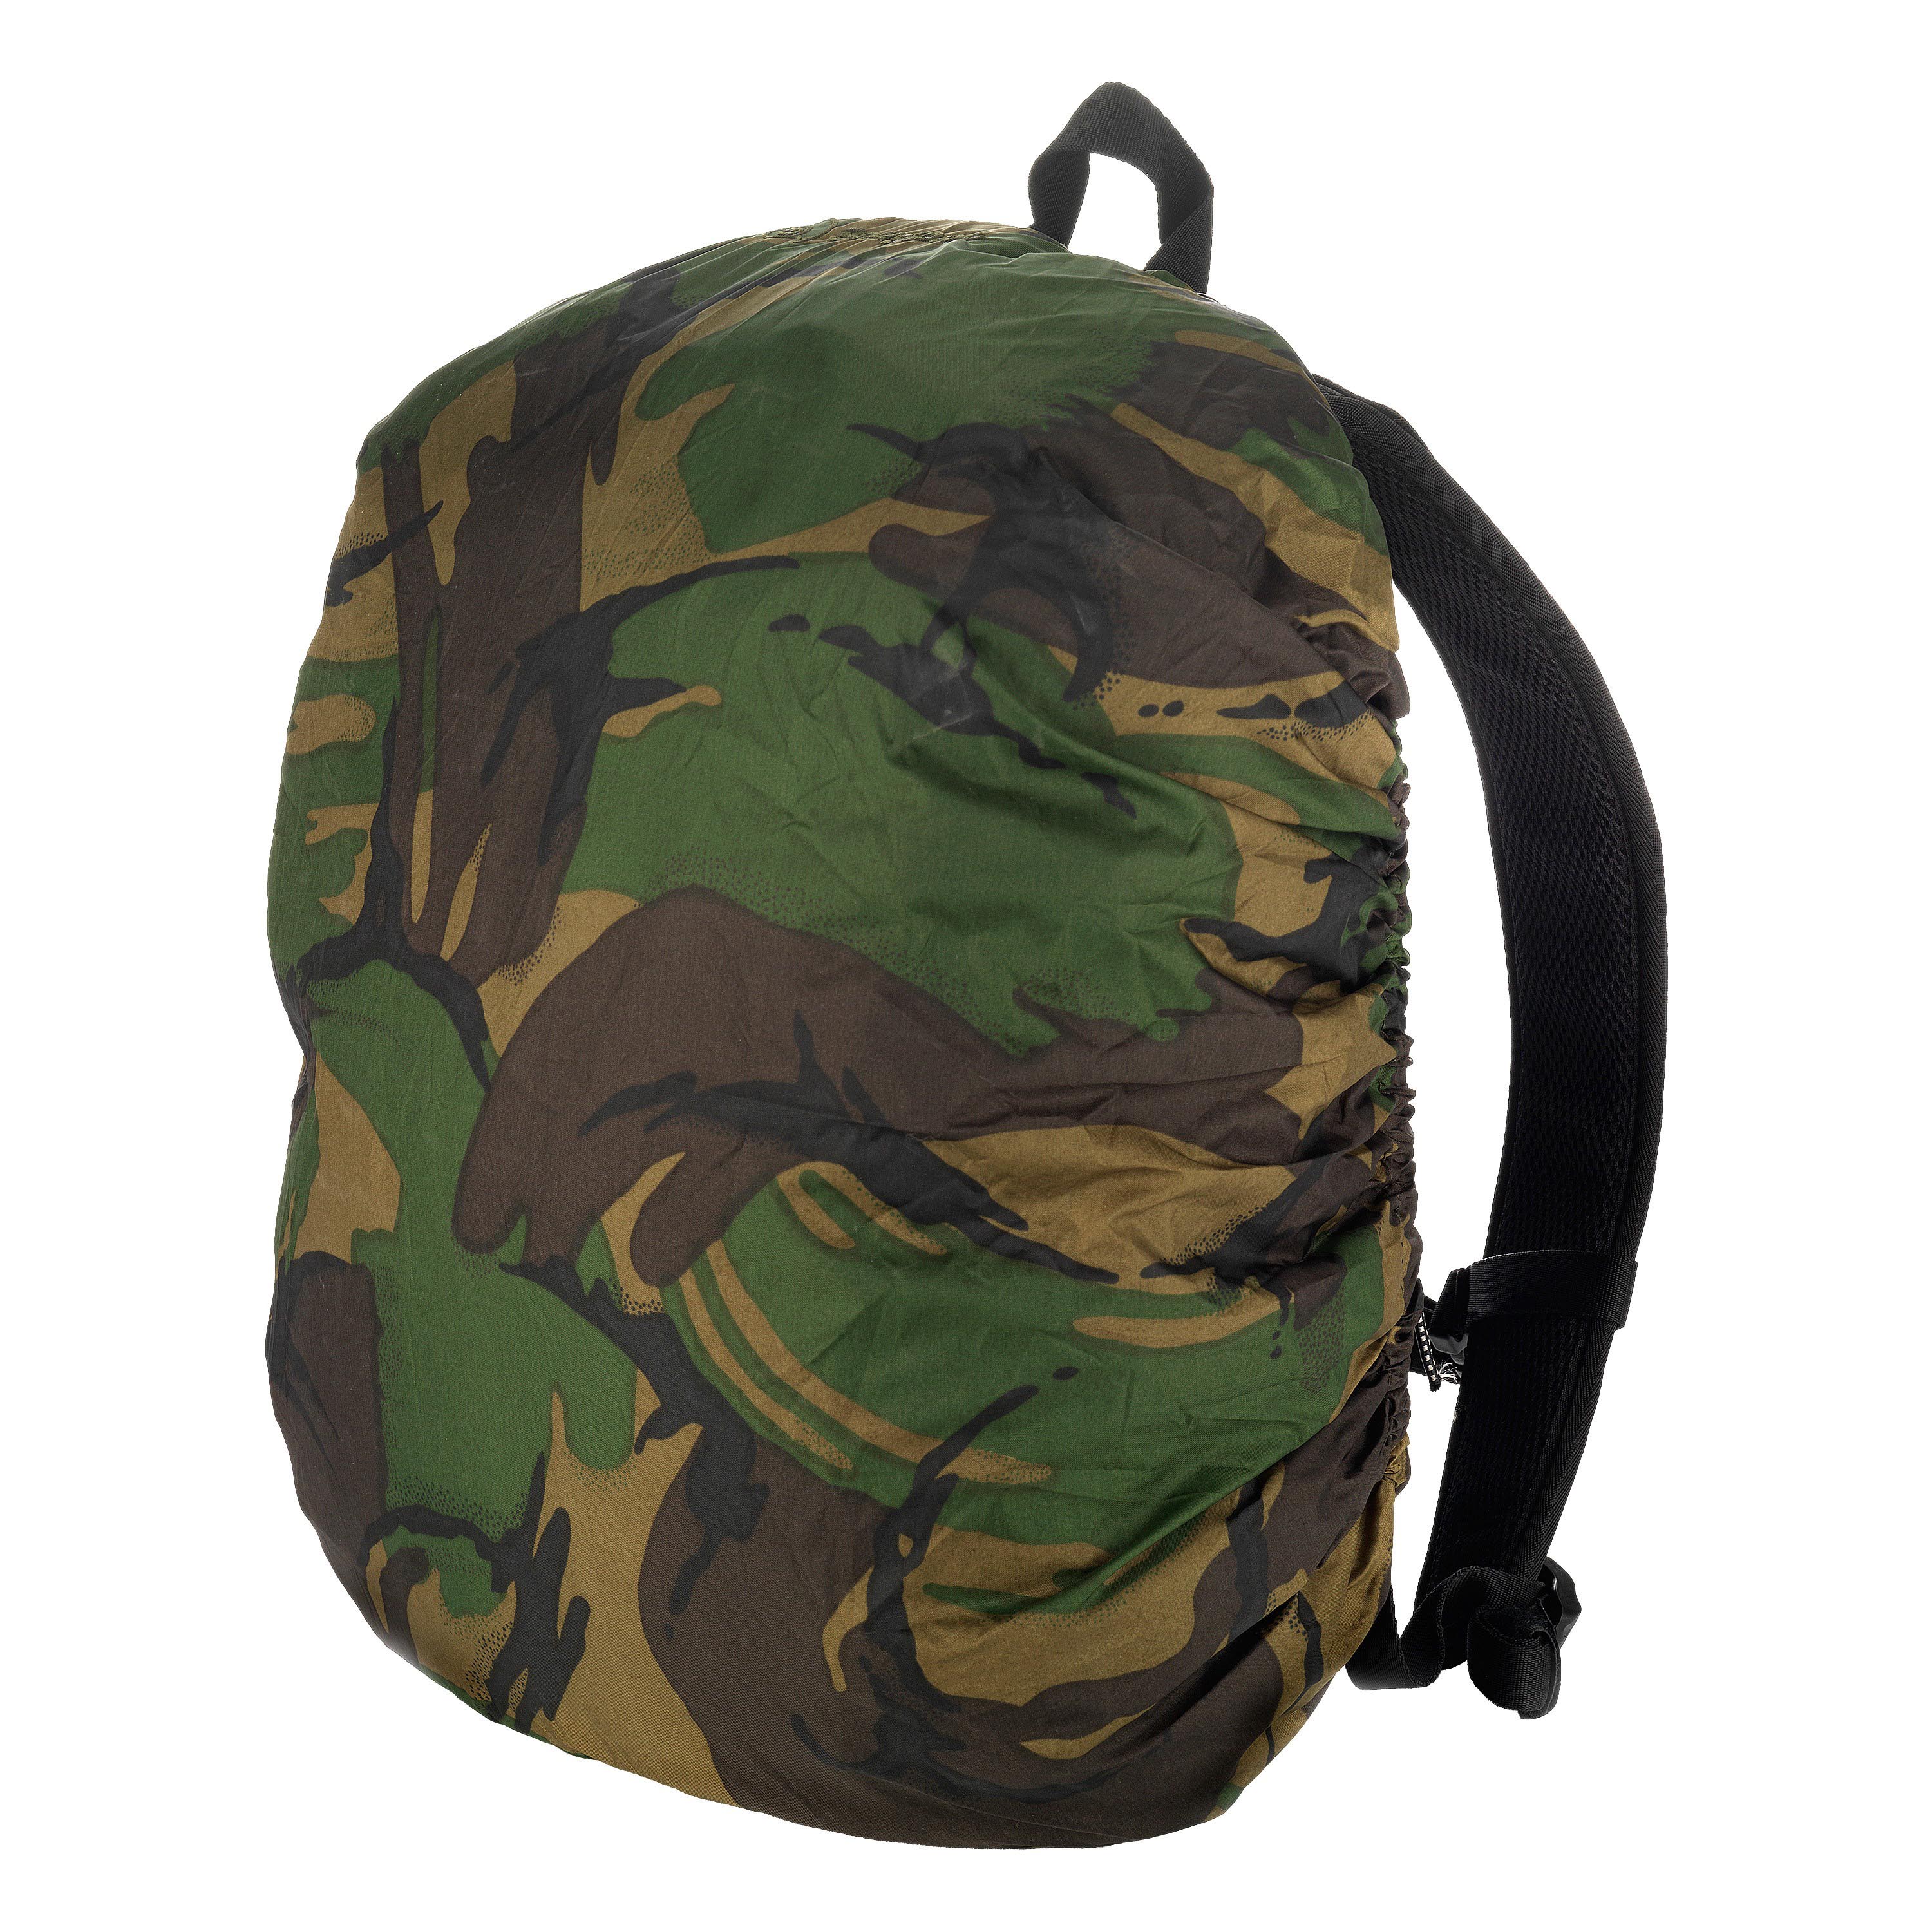 Snugpak Backpack Cover Aquacover 35 L camo | Snugpak Backpack Cover ...